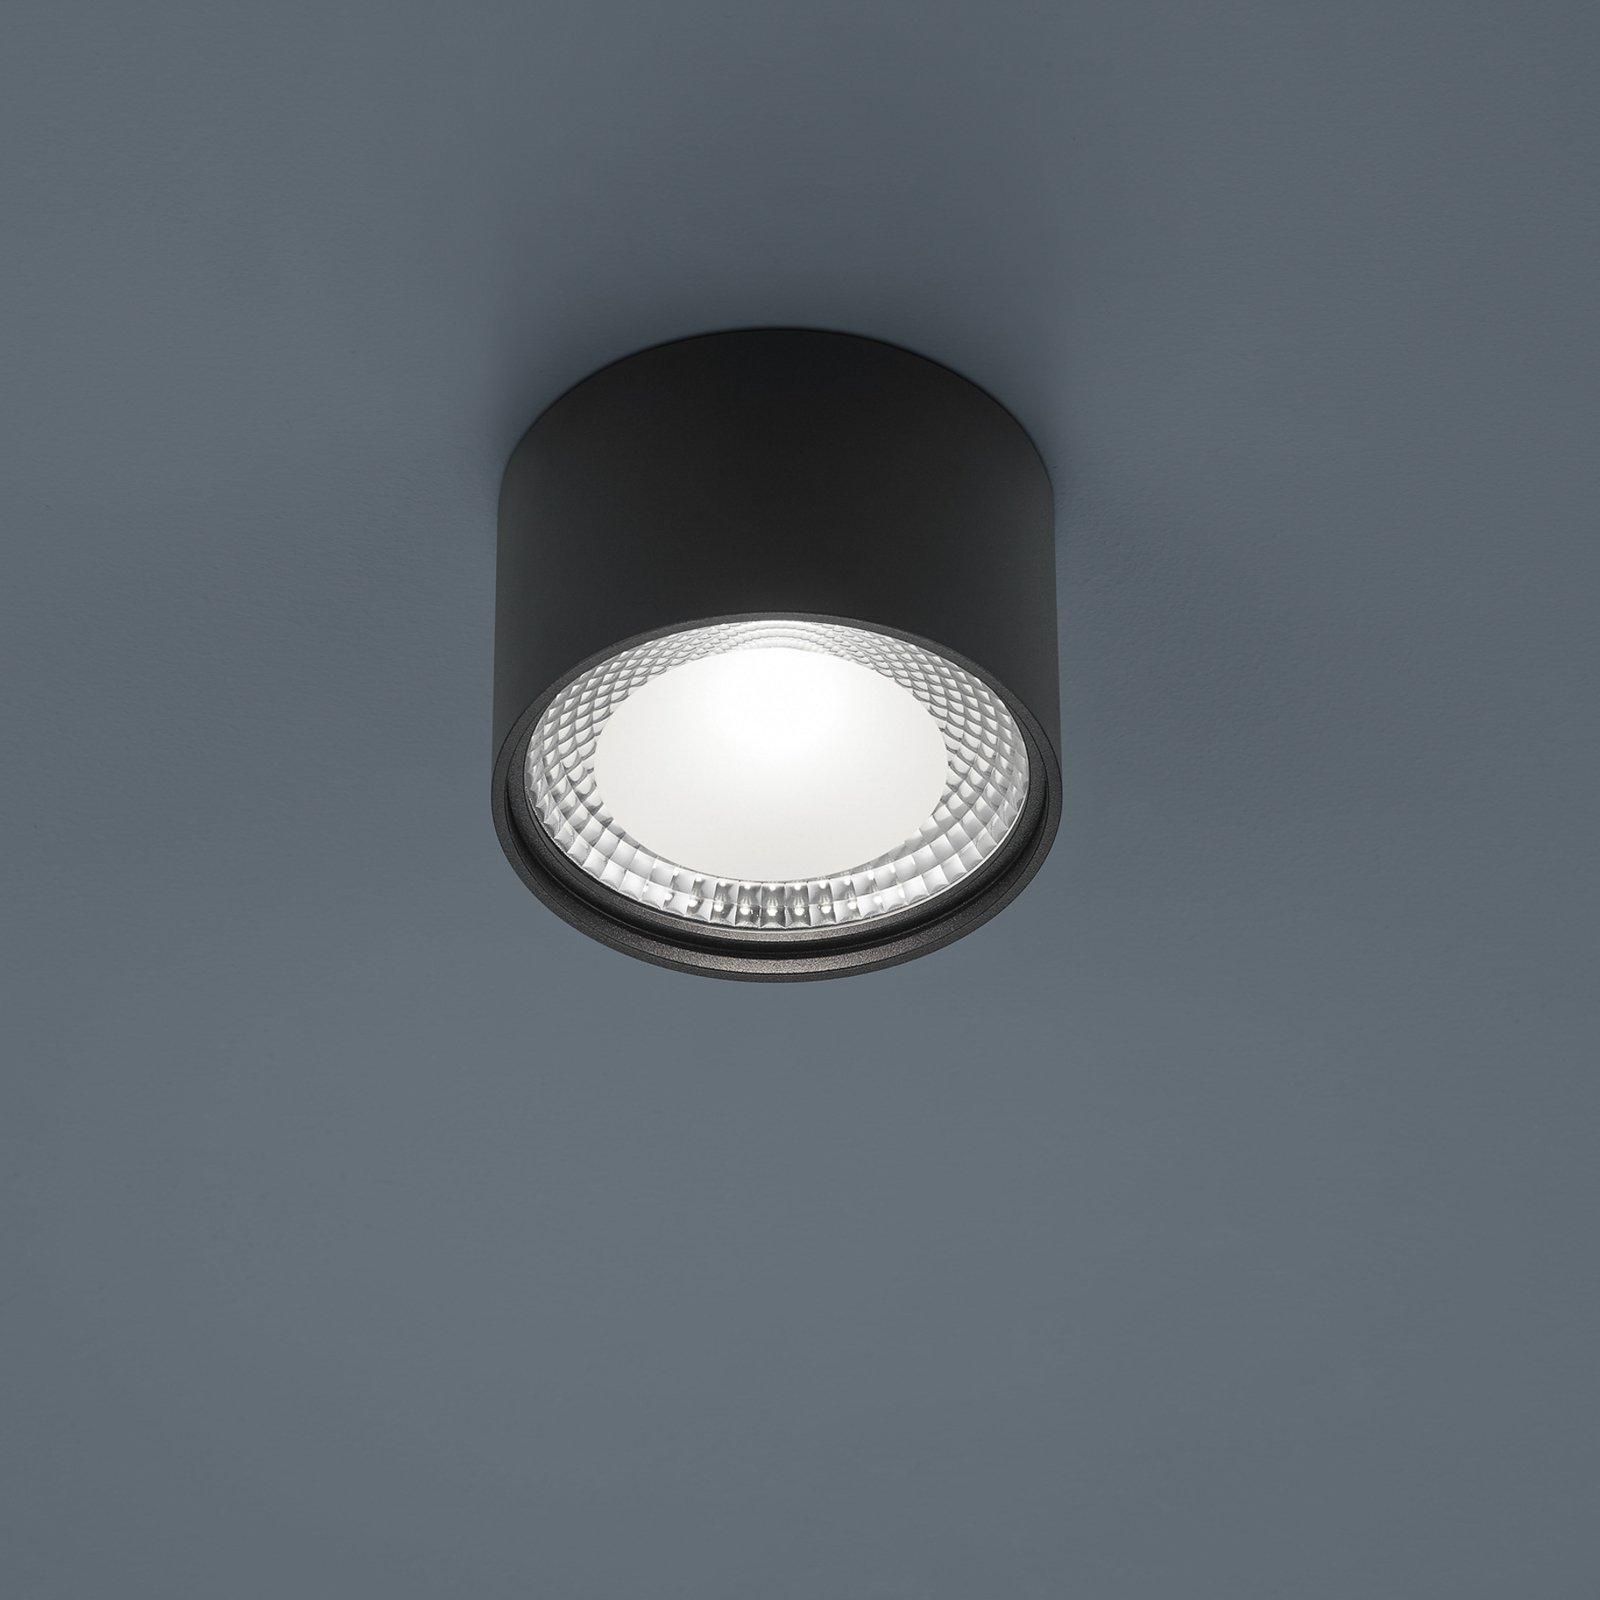 Helestra Kari LED ceiling light, round black